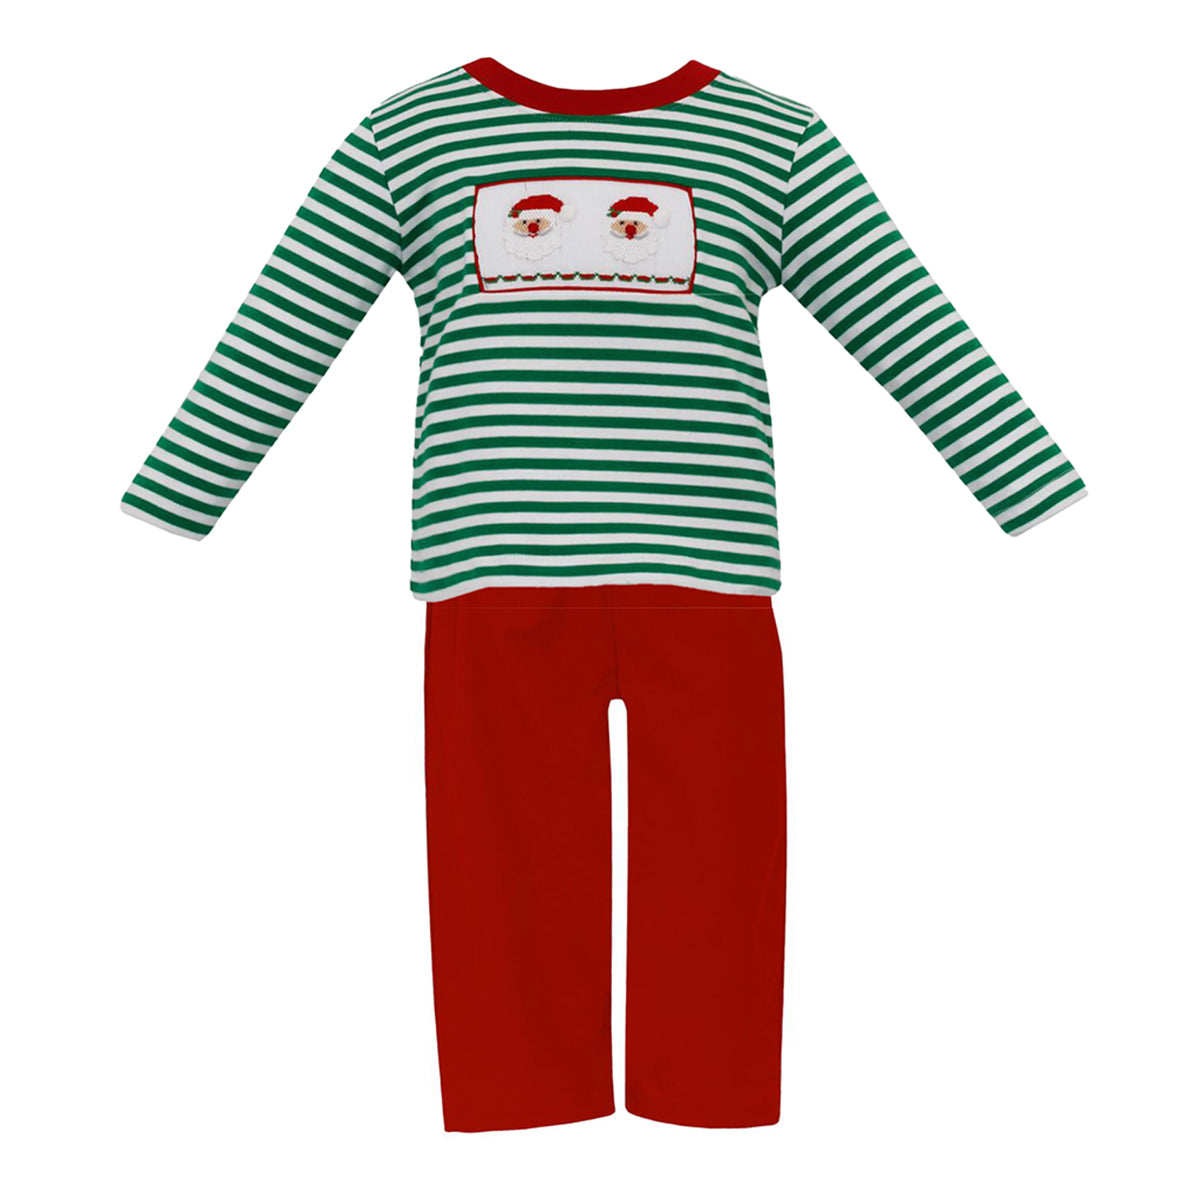 Toddler Boy's Smocked Santa Claus Christmas Pants Set by Anavini